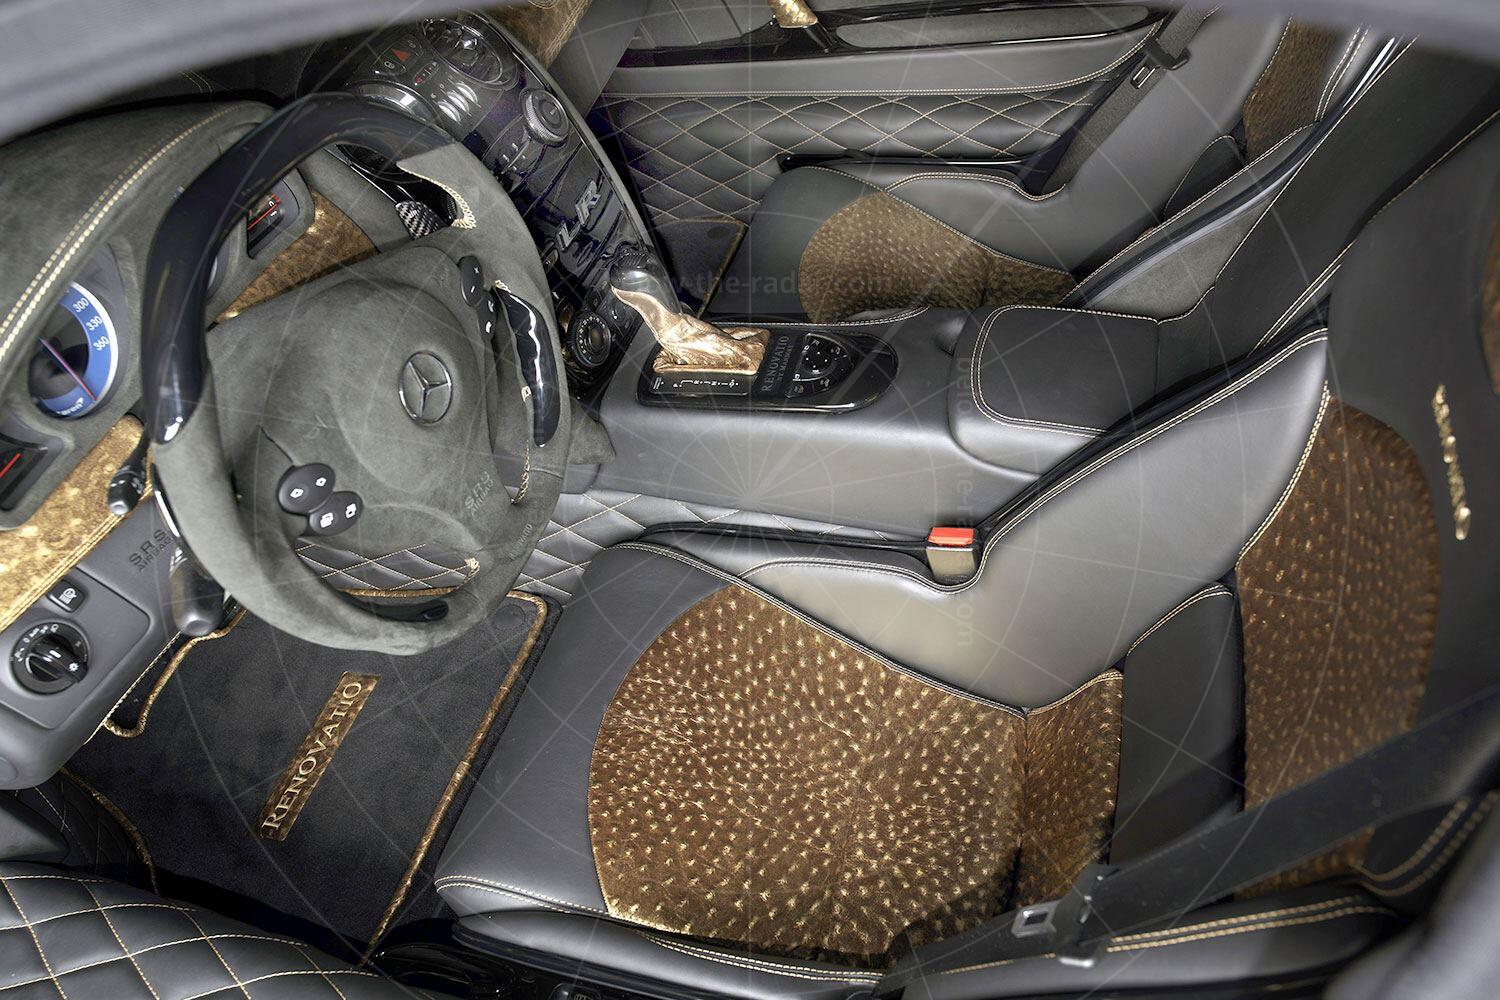 Mercedes SLR Mansory Renovatio - interior Pic: Mansory | Mercedes SLR Mansory Renovatio - interior